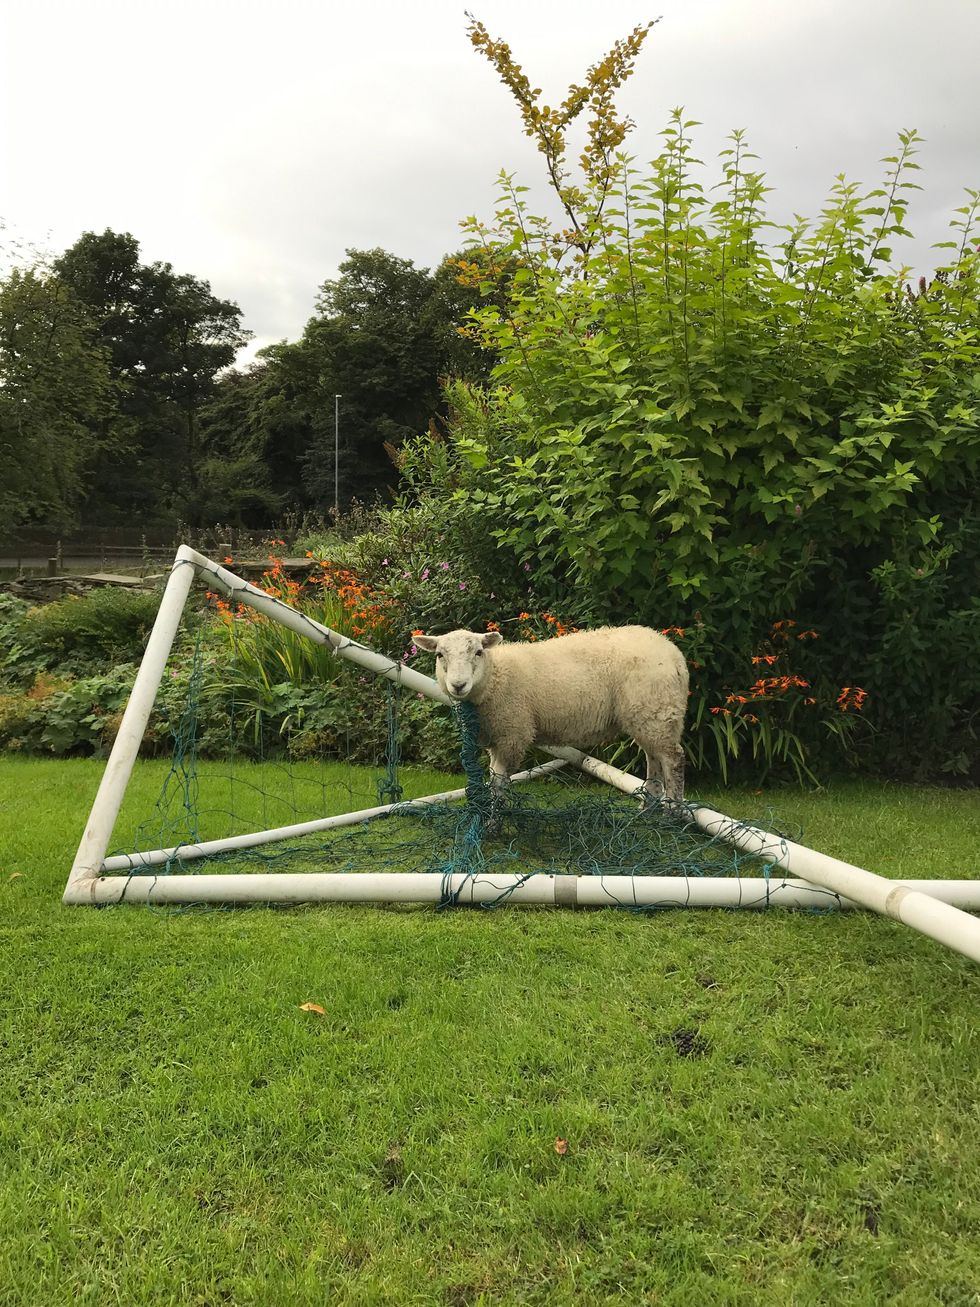 Sheep stuck in a goal net in Lancashire (RSPCA/PA)